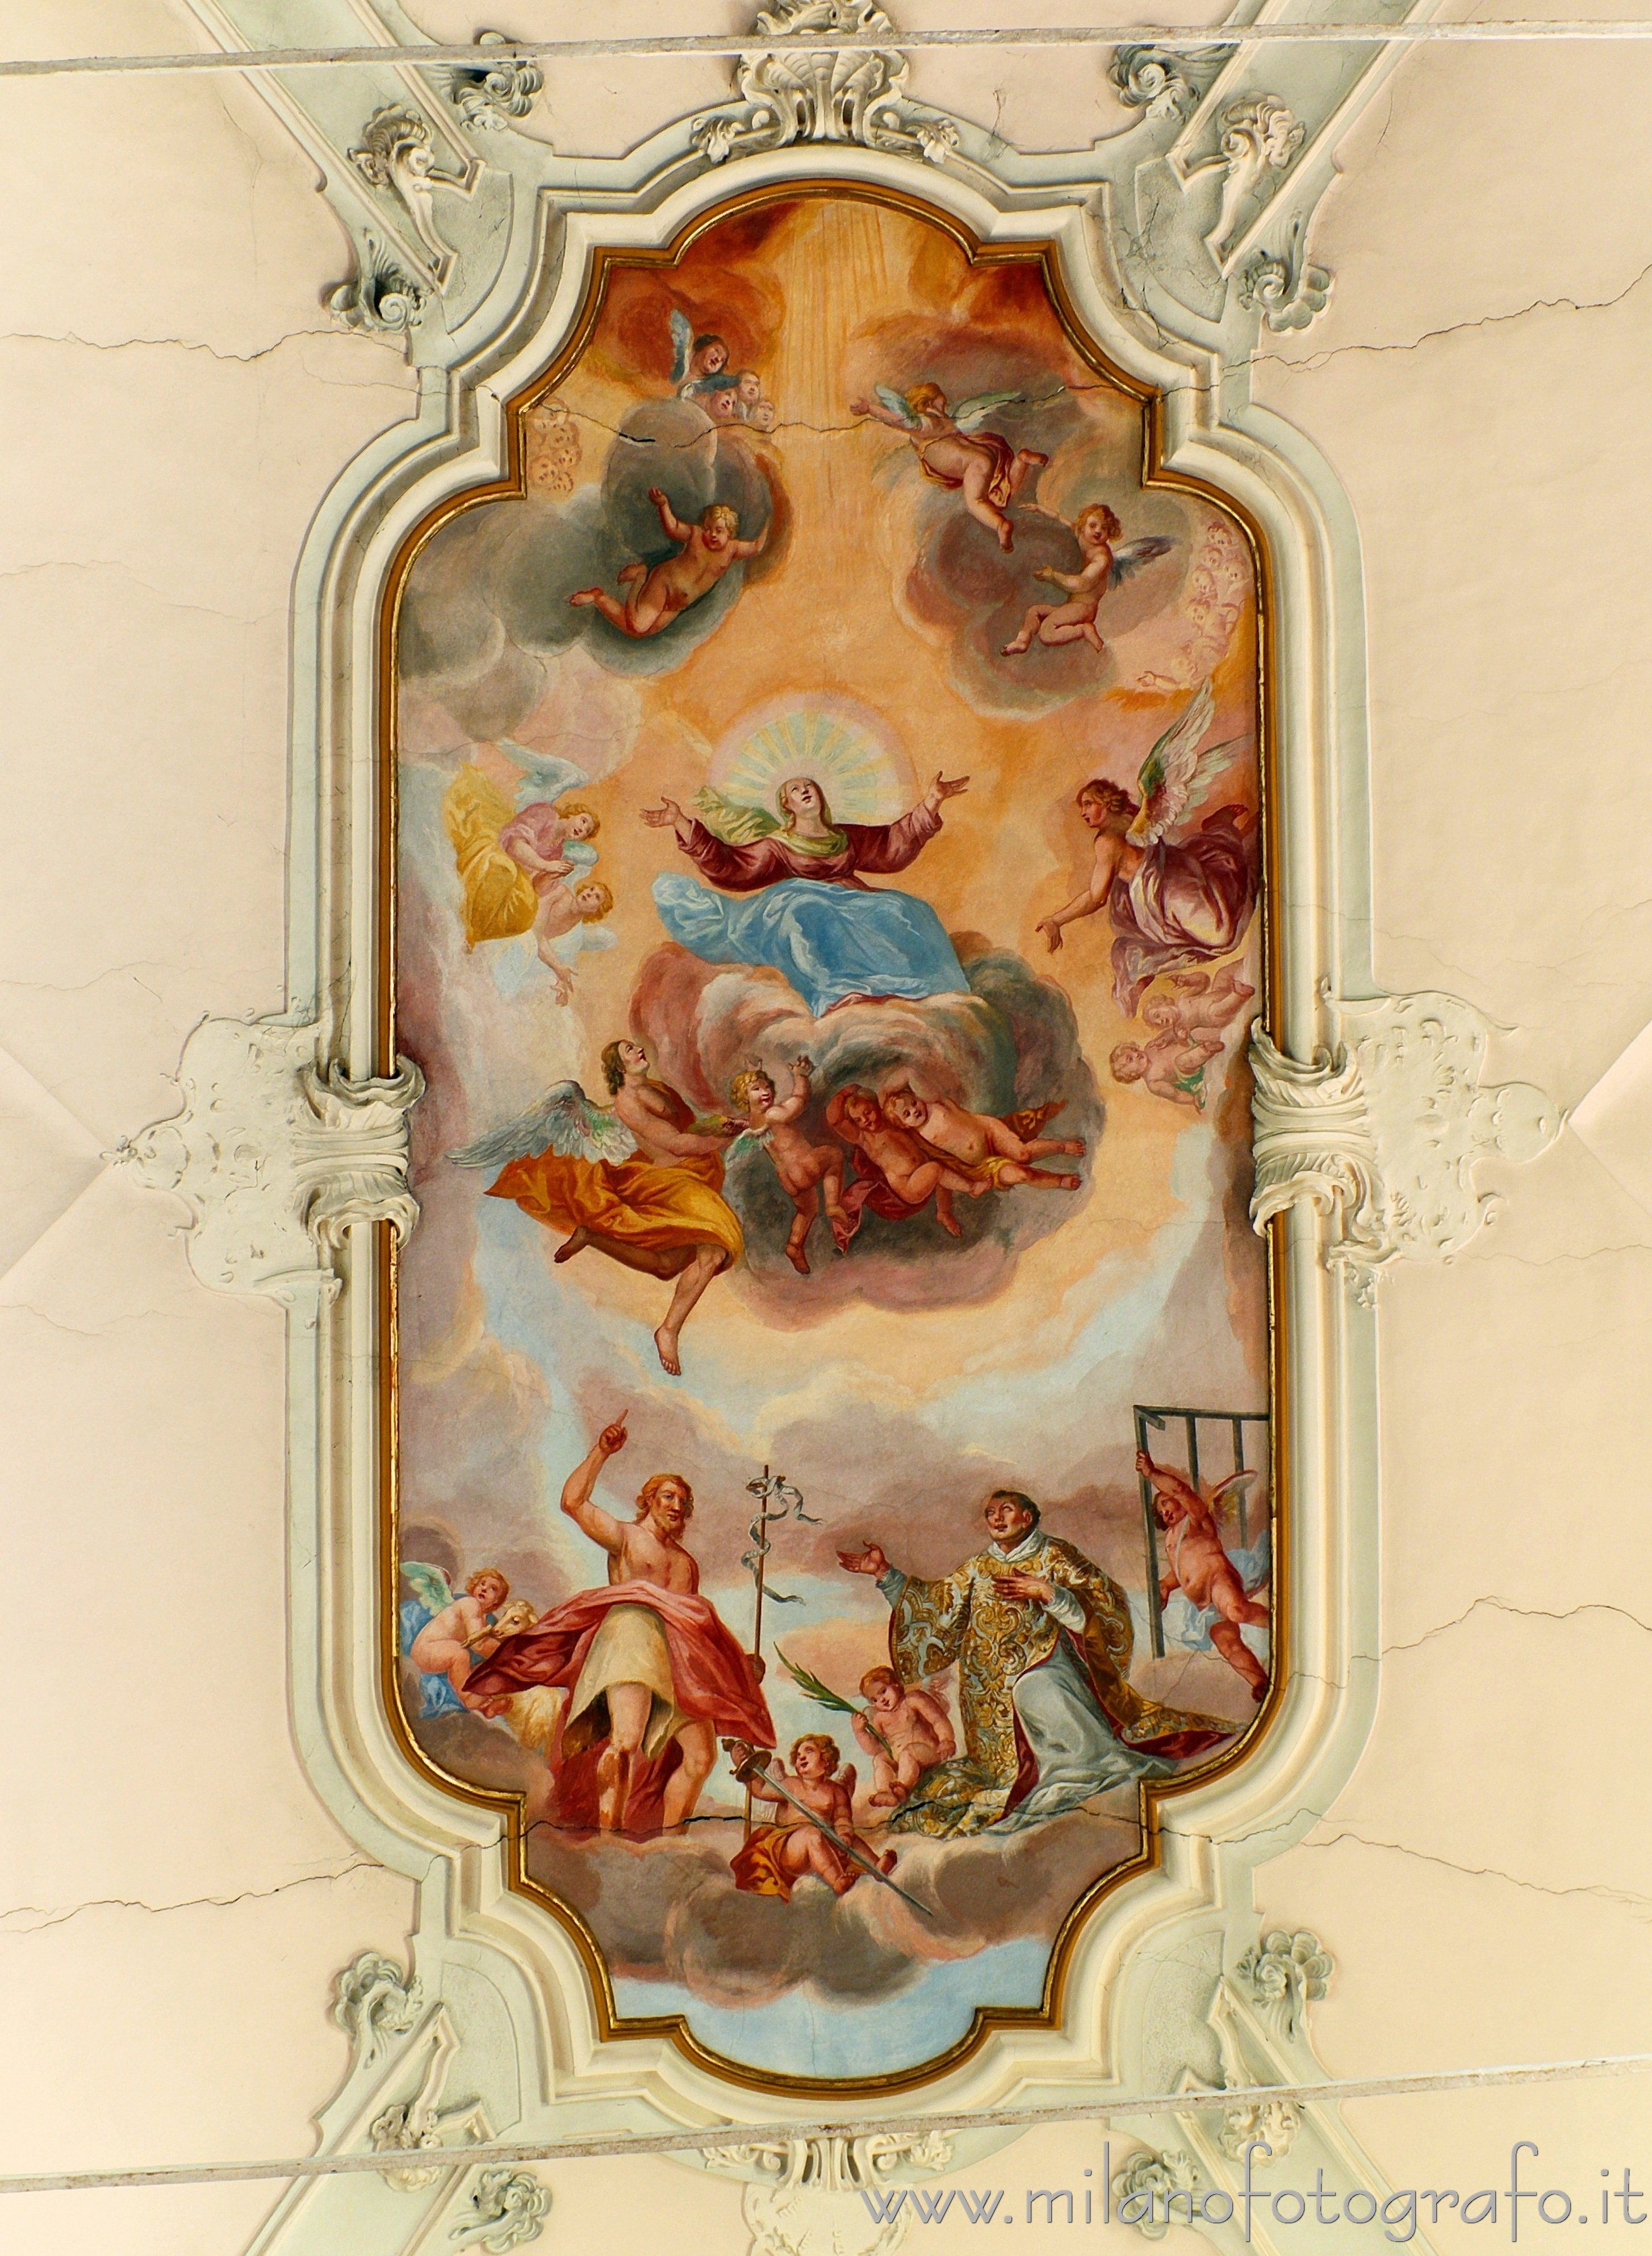 Oggiono (Lecco, Italy): Fresco of the Assumption on the ceiling of the Church of San Lorenzo - Oggiono (Lecco, Italy)